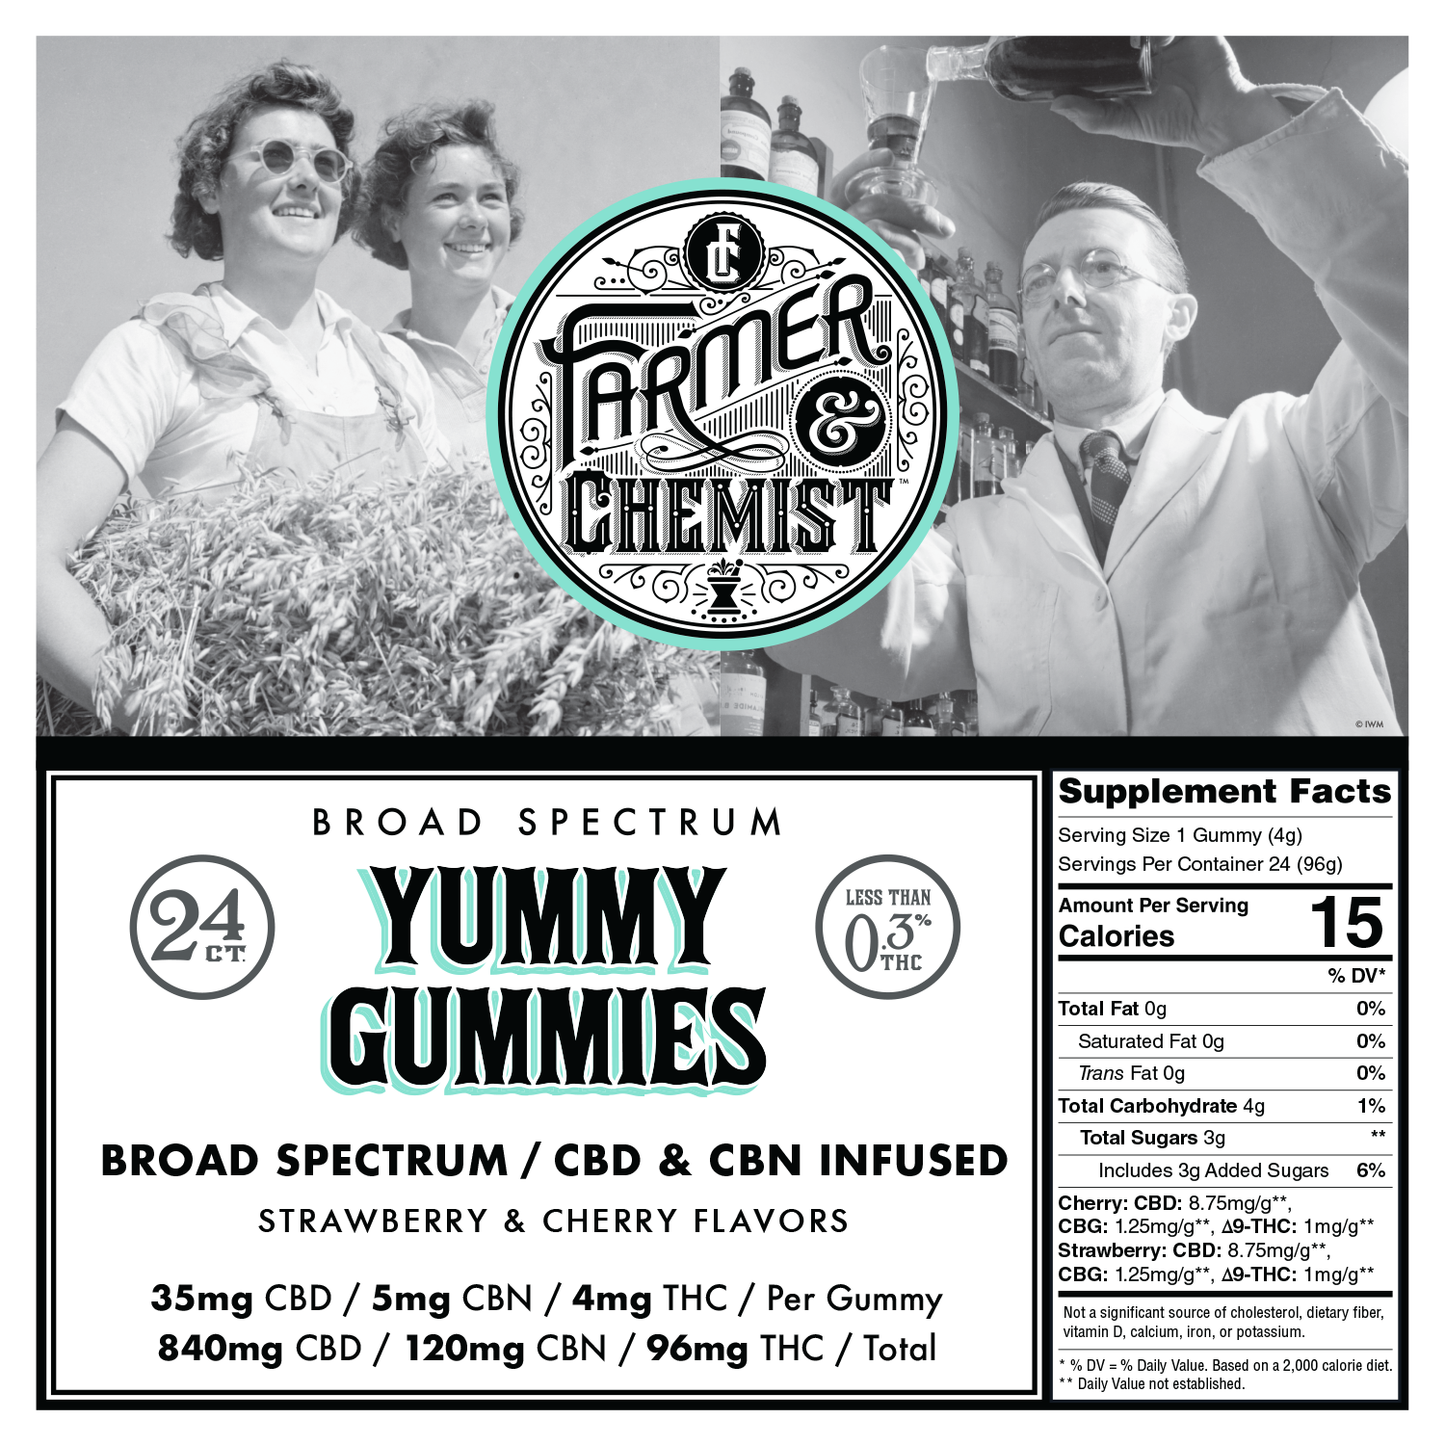 YUMMY GUMMIES - 24ct 35mg CBD/5mg CBN/4mg THC Fruchtgummis (Karton mit 4)